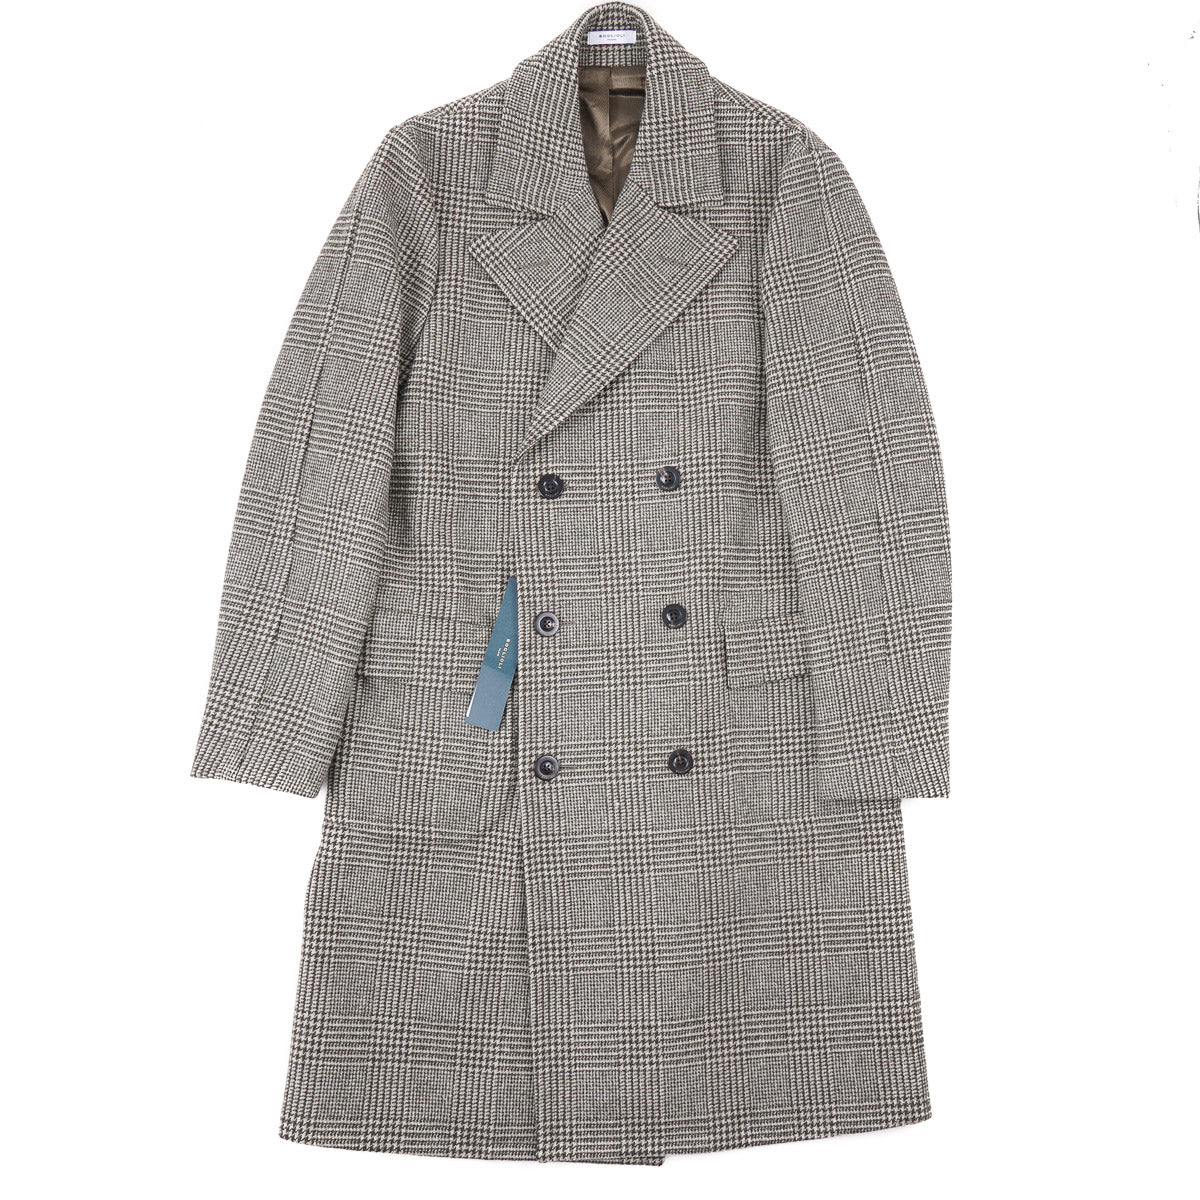 Boglioli Glen Check Wool Overcoat - Top Shelf Apparel